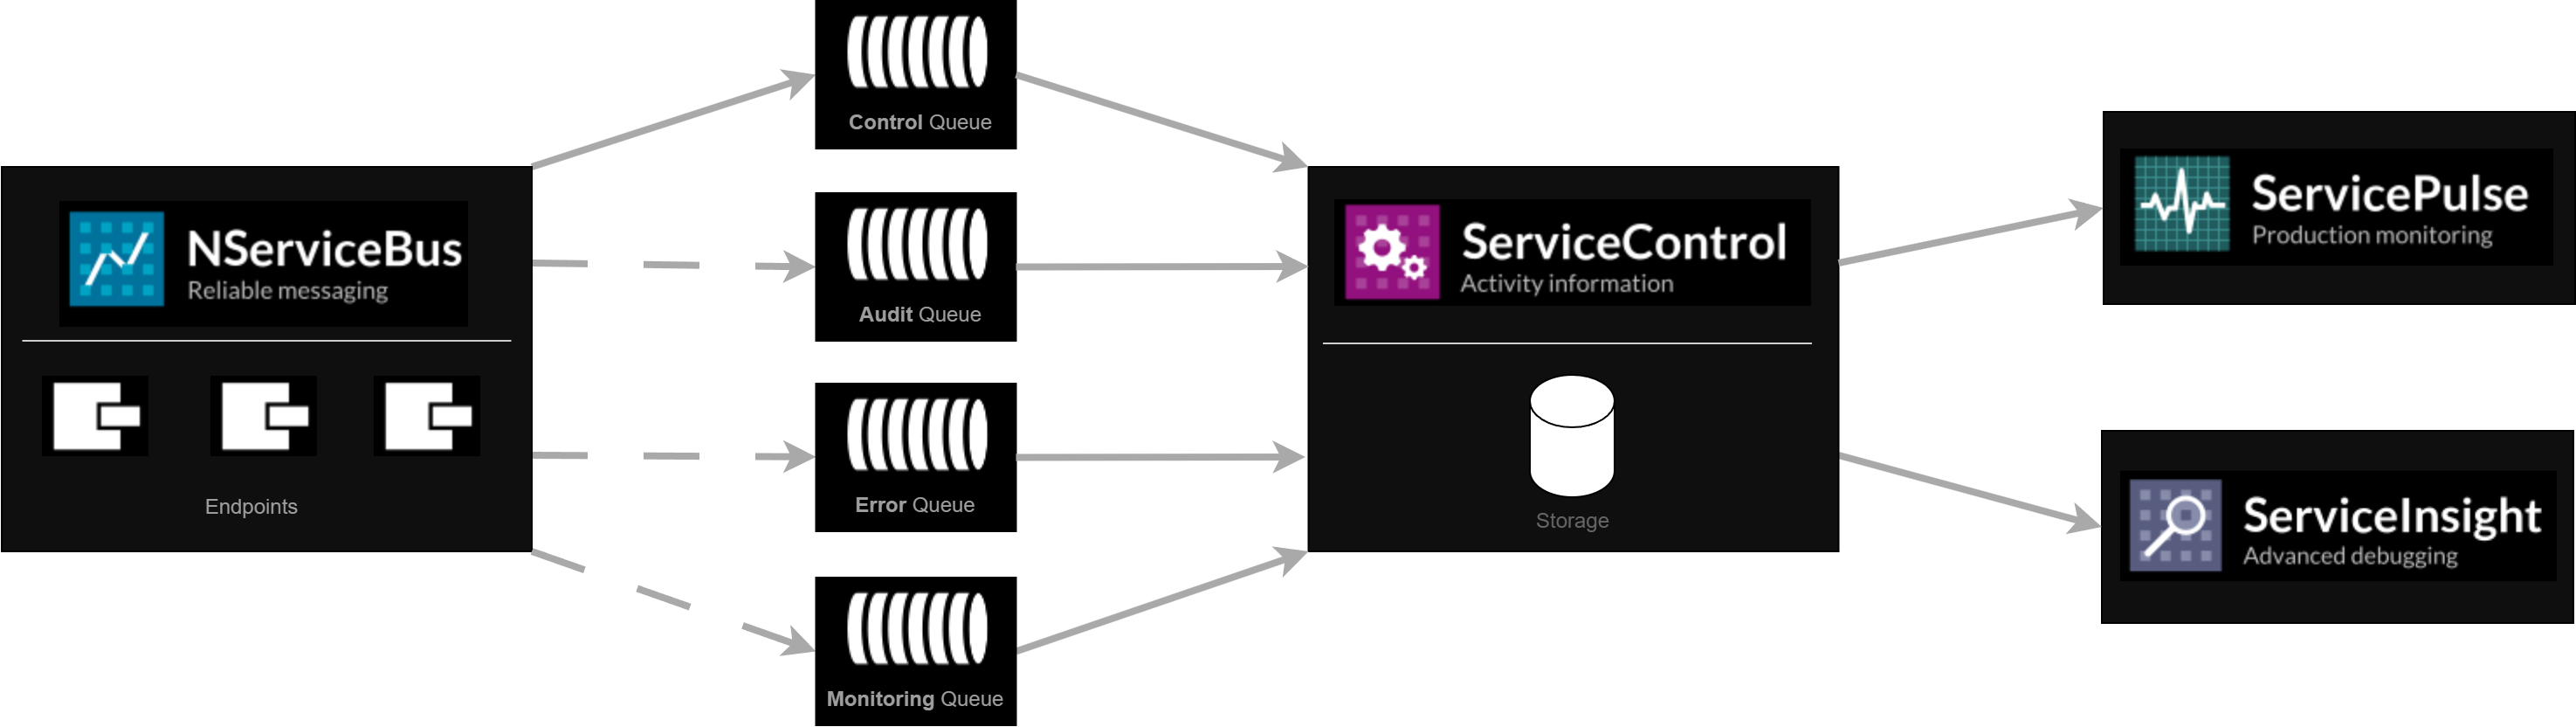 Particular Service Platform architecture